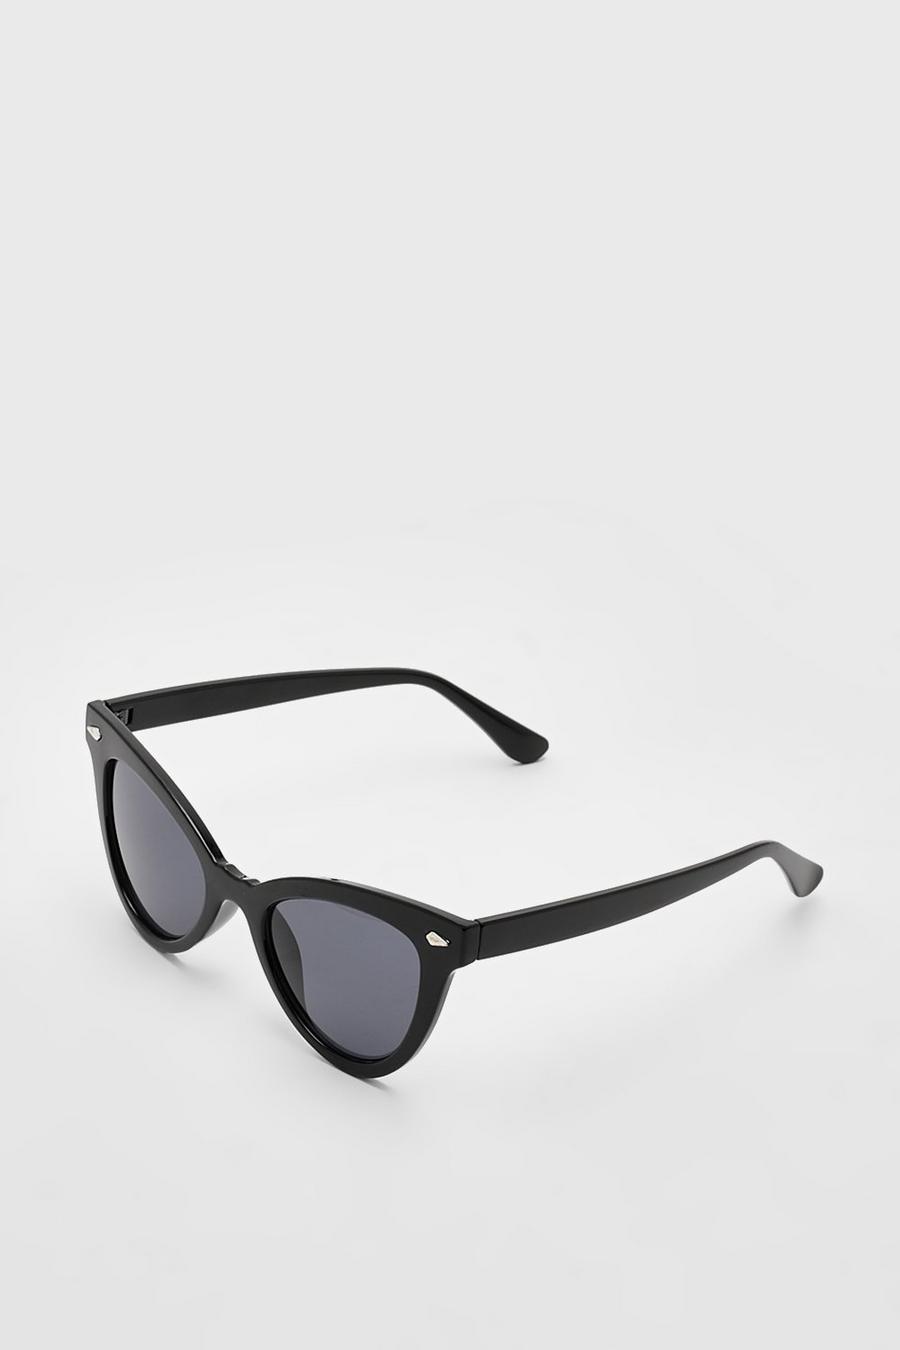 All Black Cat Eye Sunglasses 